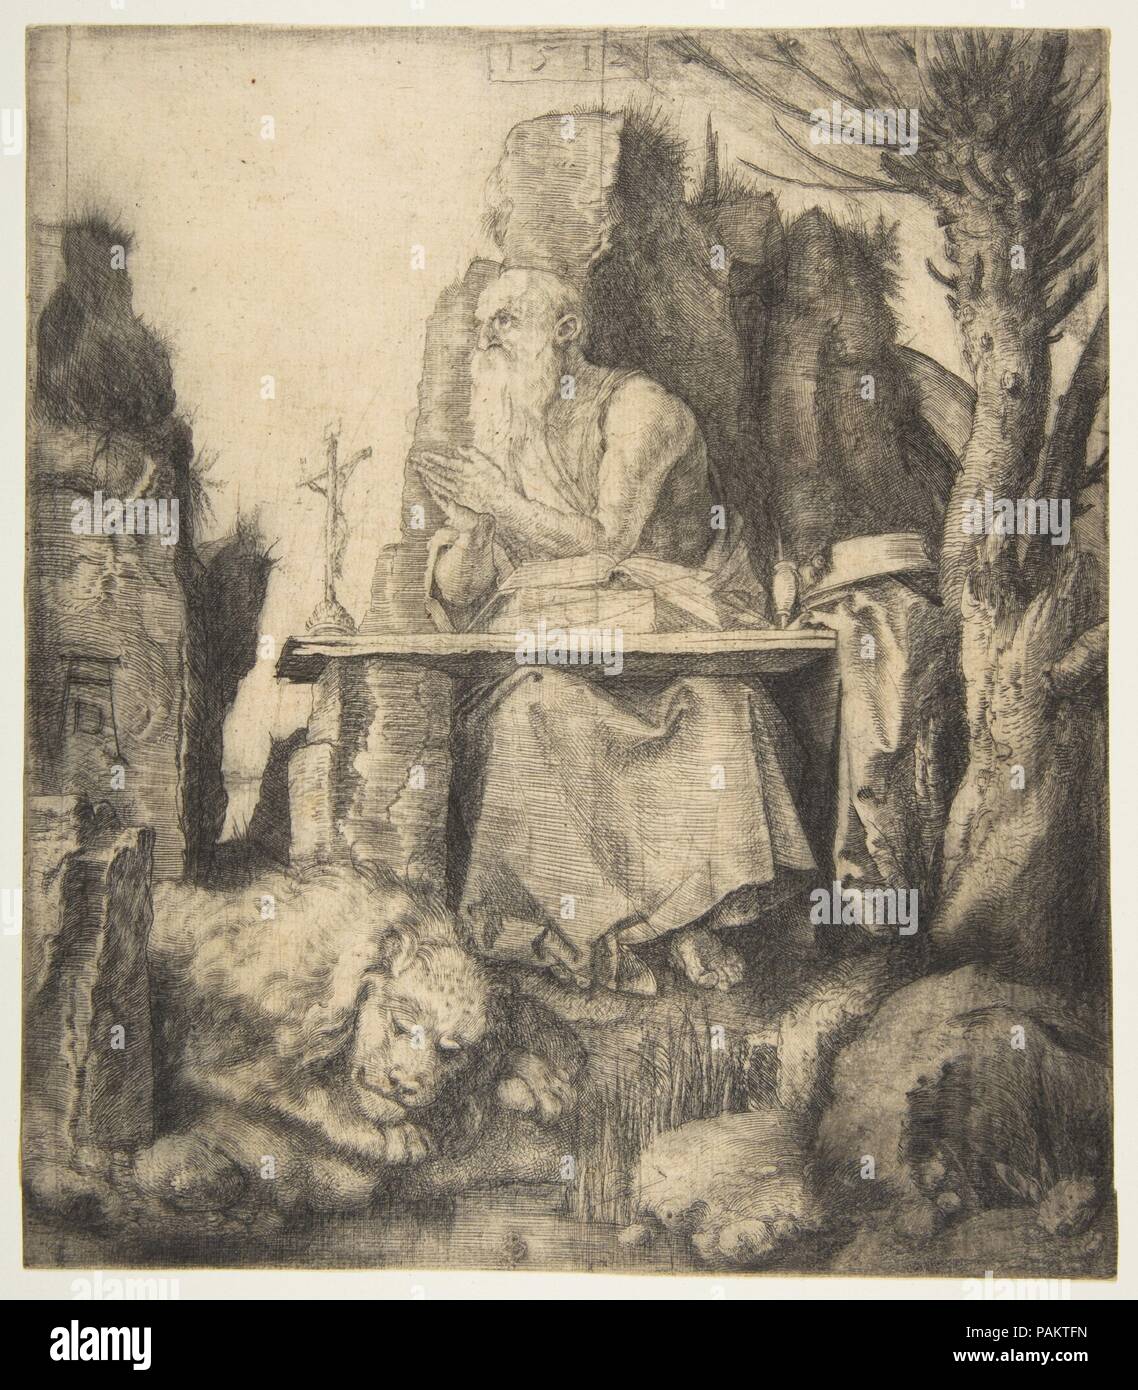 Saint Jerome by the Pollard Willow. Artist: Albrecht Dürer (German, Nuremberg 1471-1528 Nuremberg). Dimensions: sheet: 8 1/4 x 7 3/16 in. (21 x 18.3 cm). Date: 1512. Museum: Metropolitan Museum of Art, New York, USA. Stock Photo